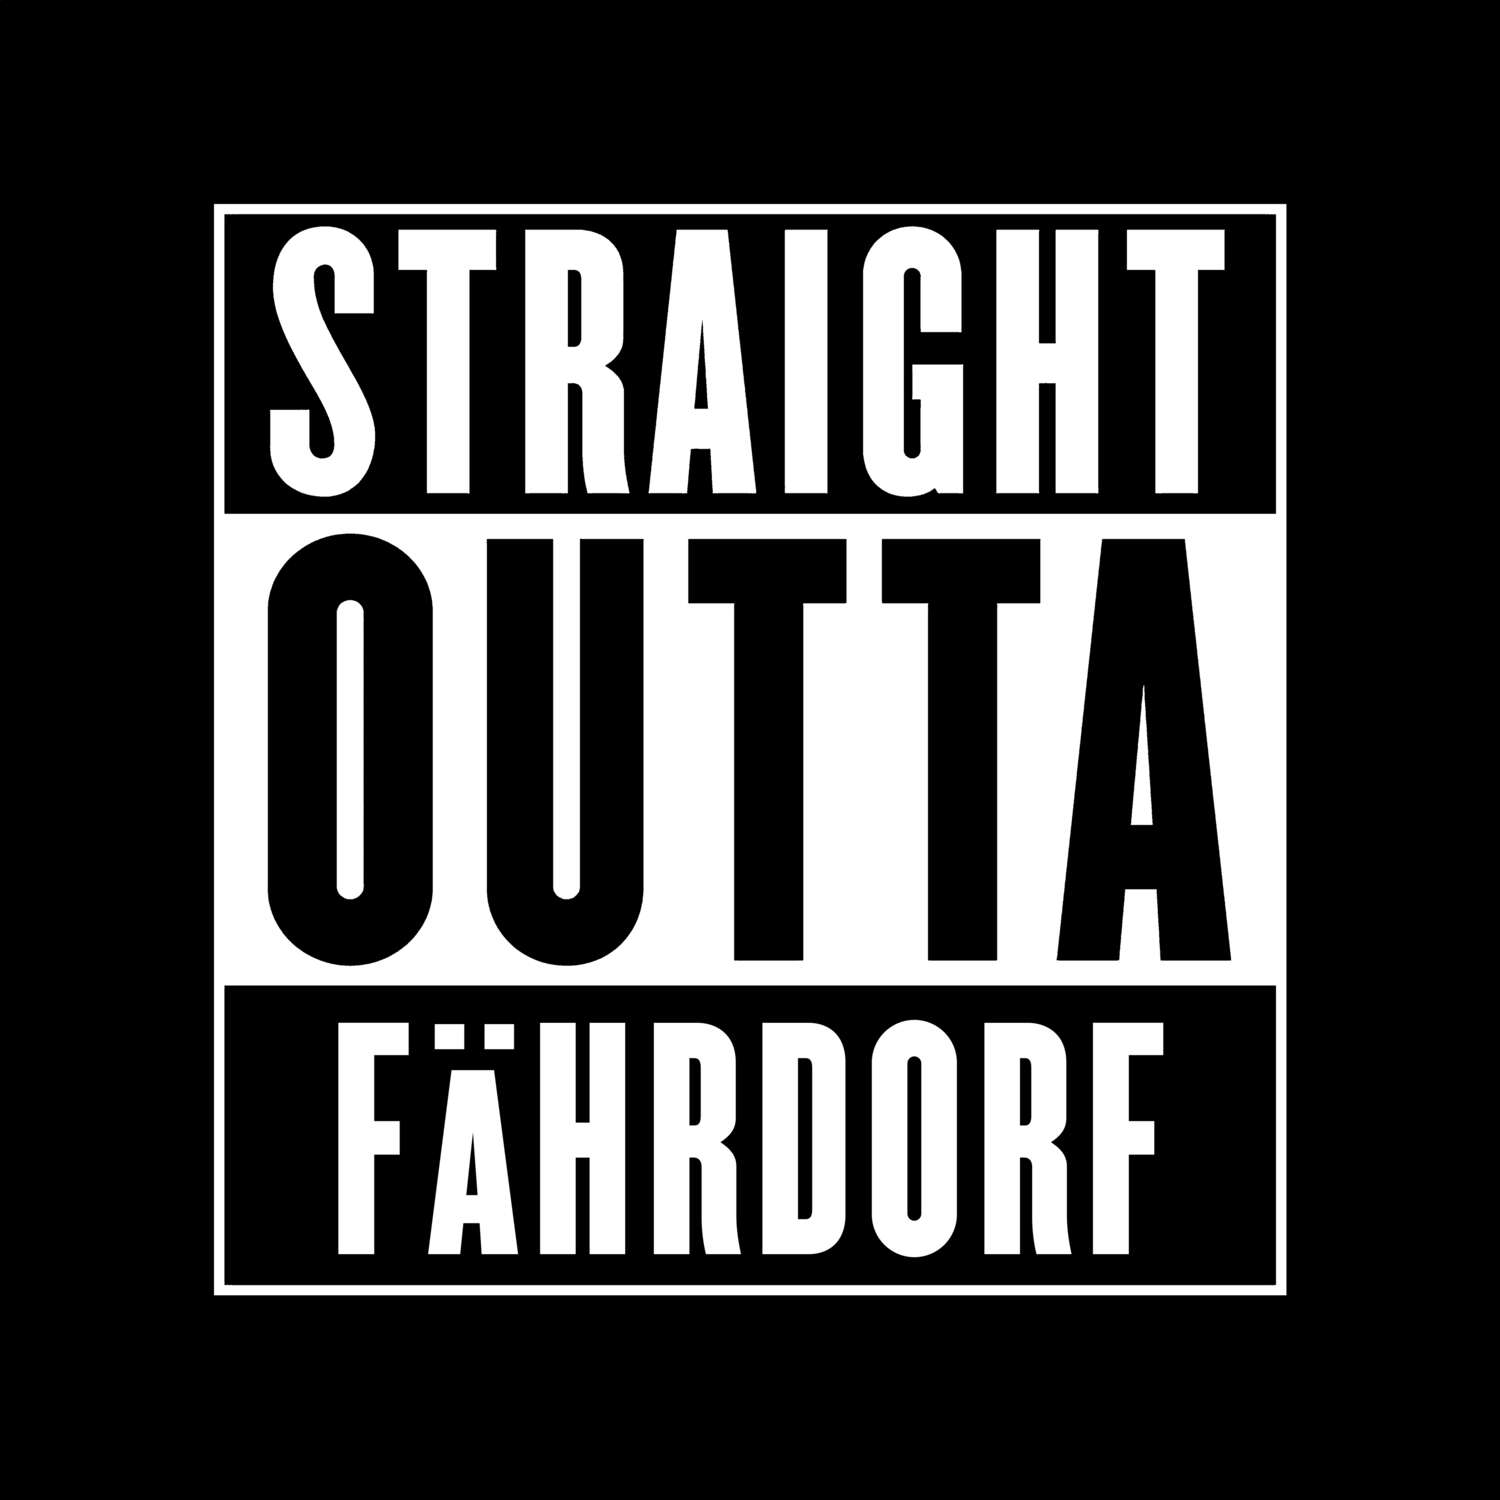 Fährdorf T-Shirt »Straight Outta«